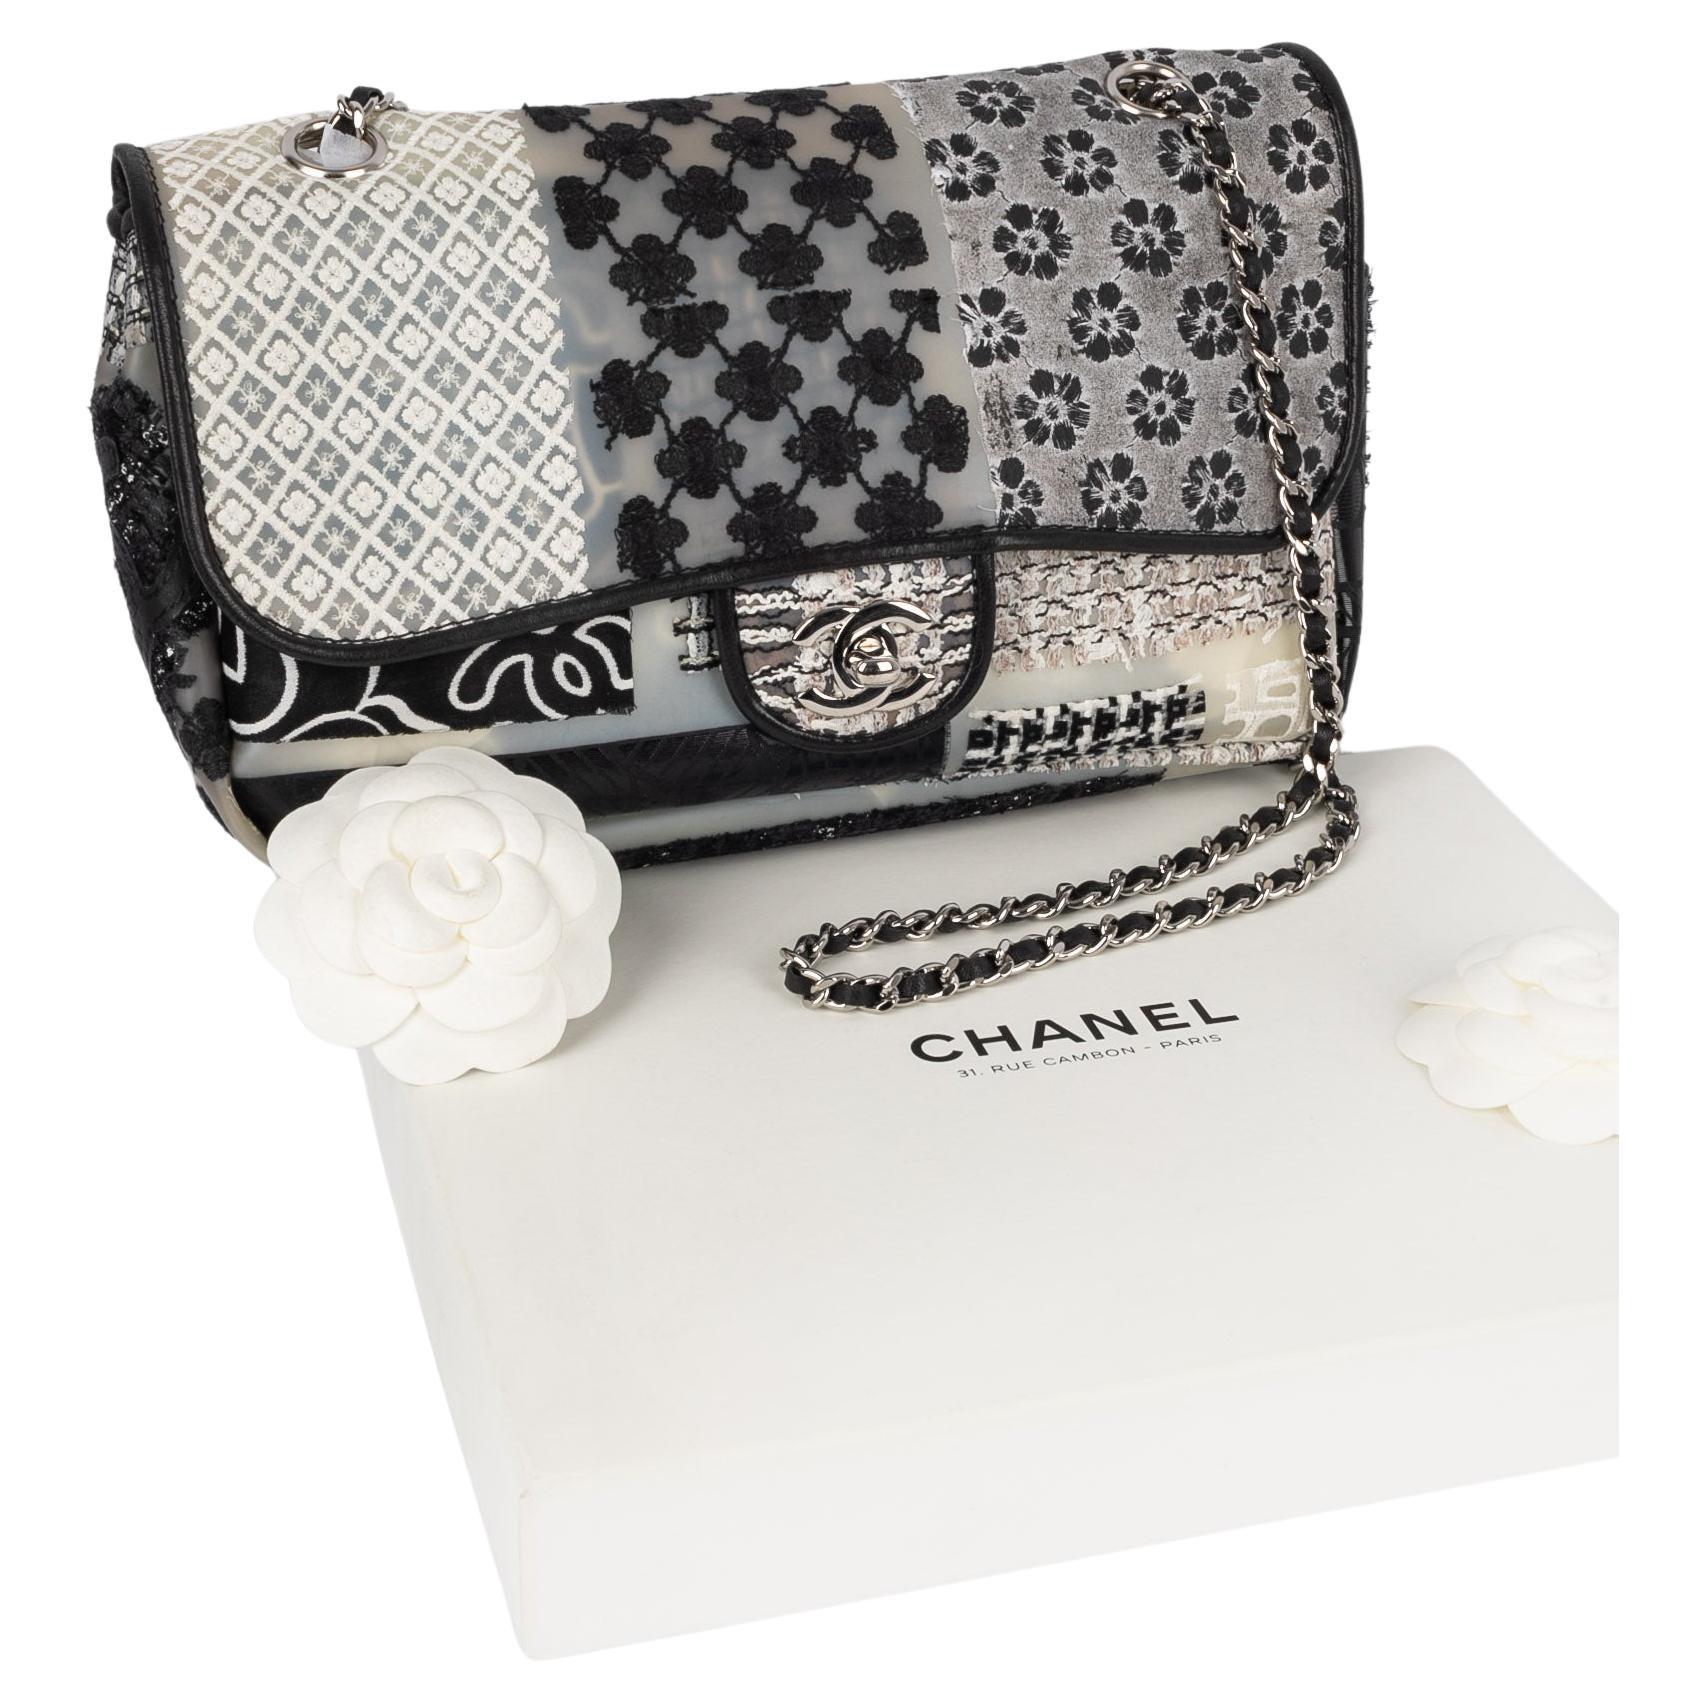 Chanel bag 2010/2011 For Sale